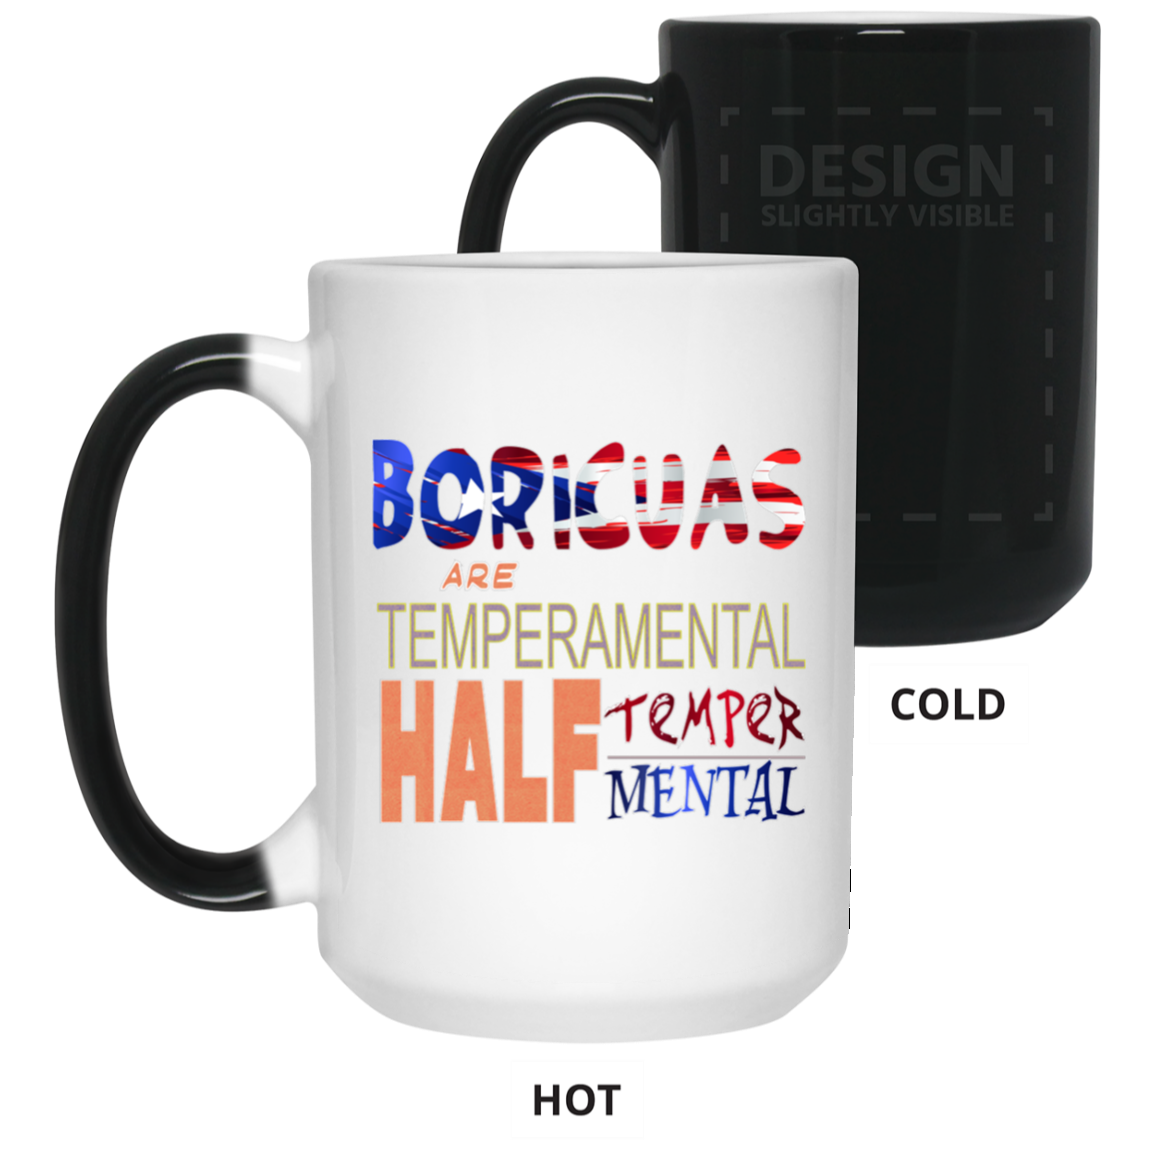 Temper Mental Boricuas 15 oz. Color Changing Mug